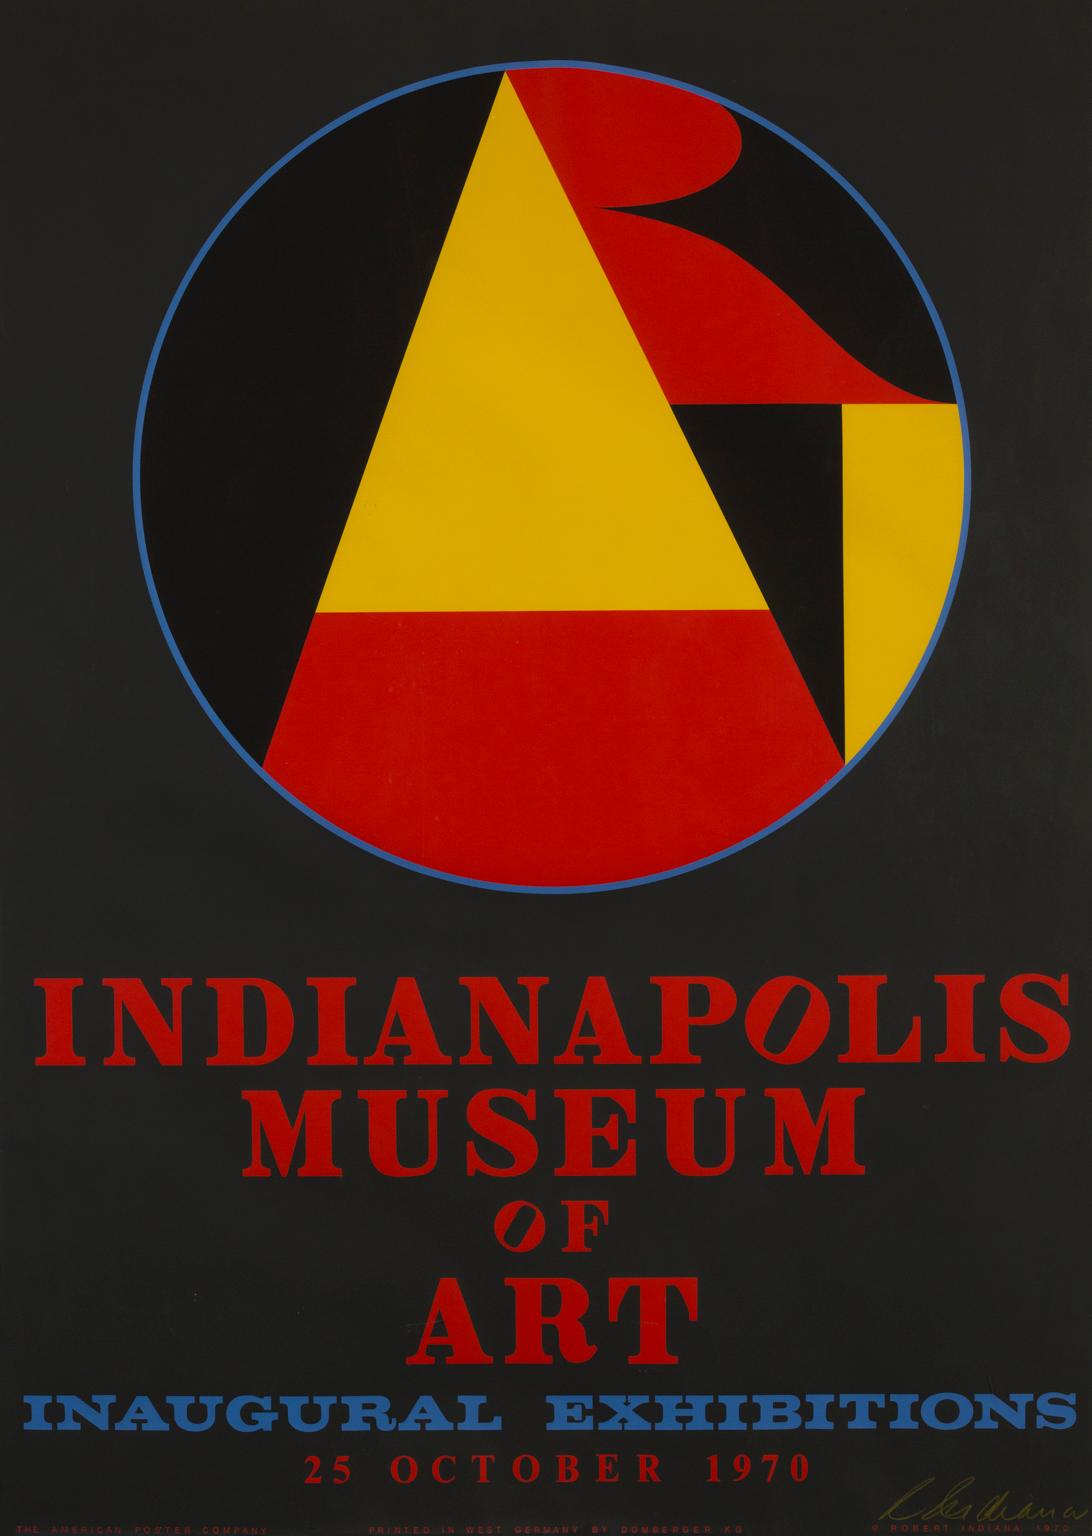 «Indianapolis Museum of Art Inaugural Exhibitions », sérigraphie couleur, signée - Print de Robert Indiana